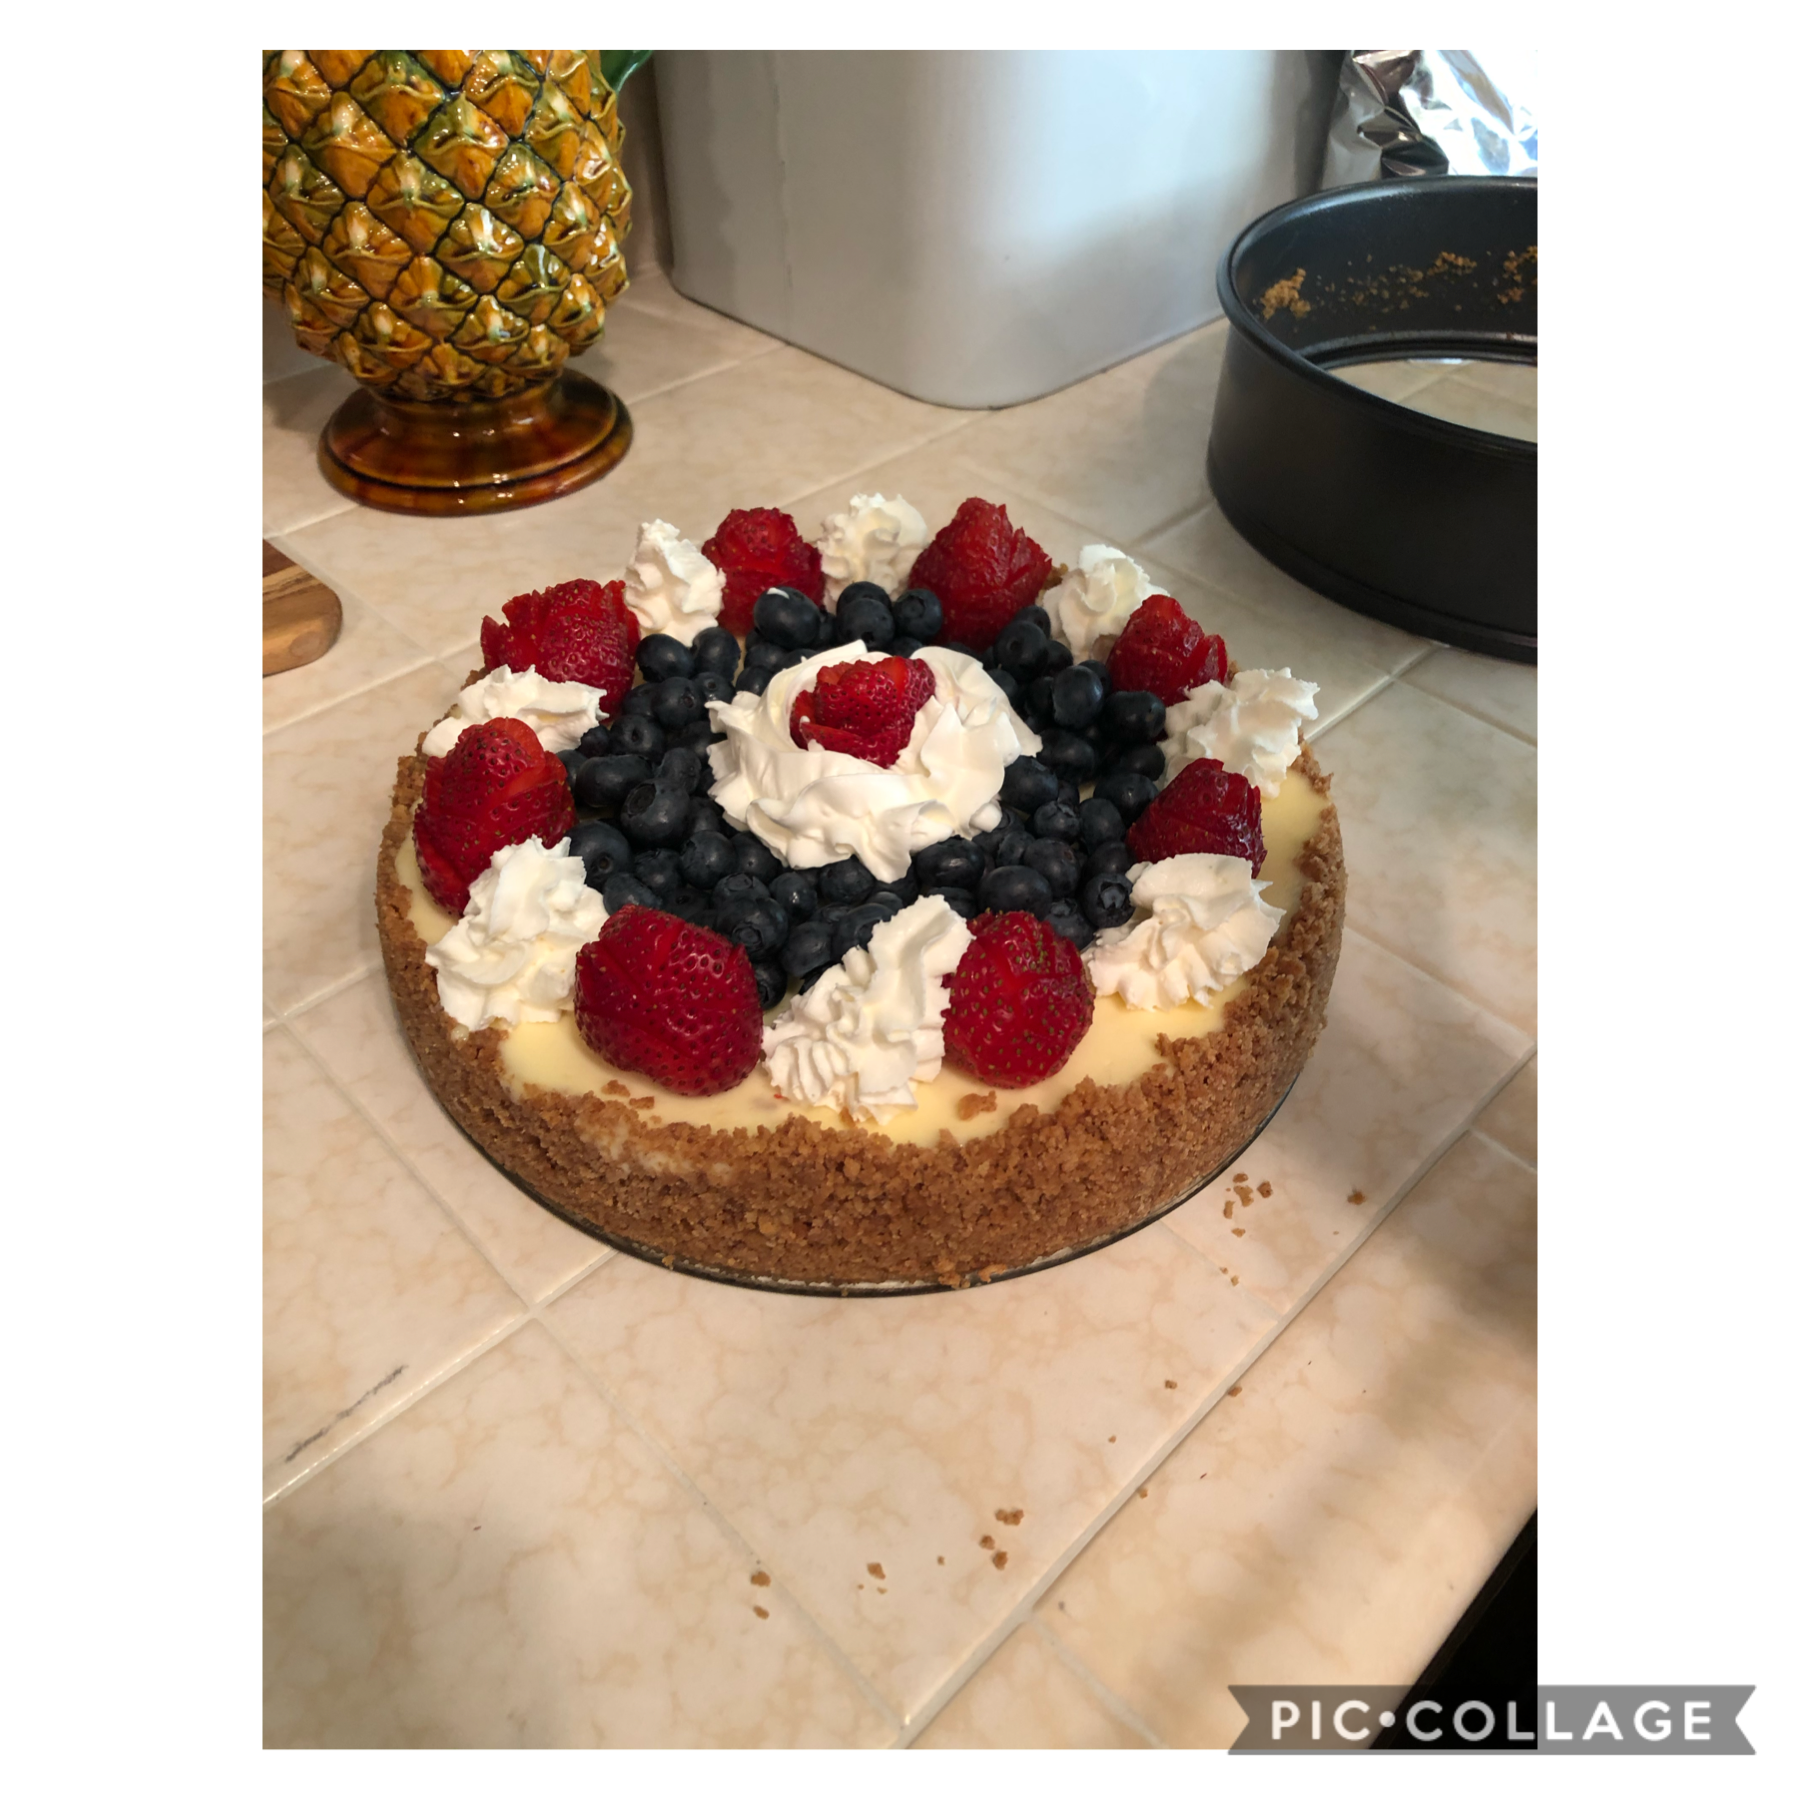 I made cheesecake:) 